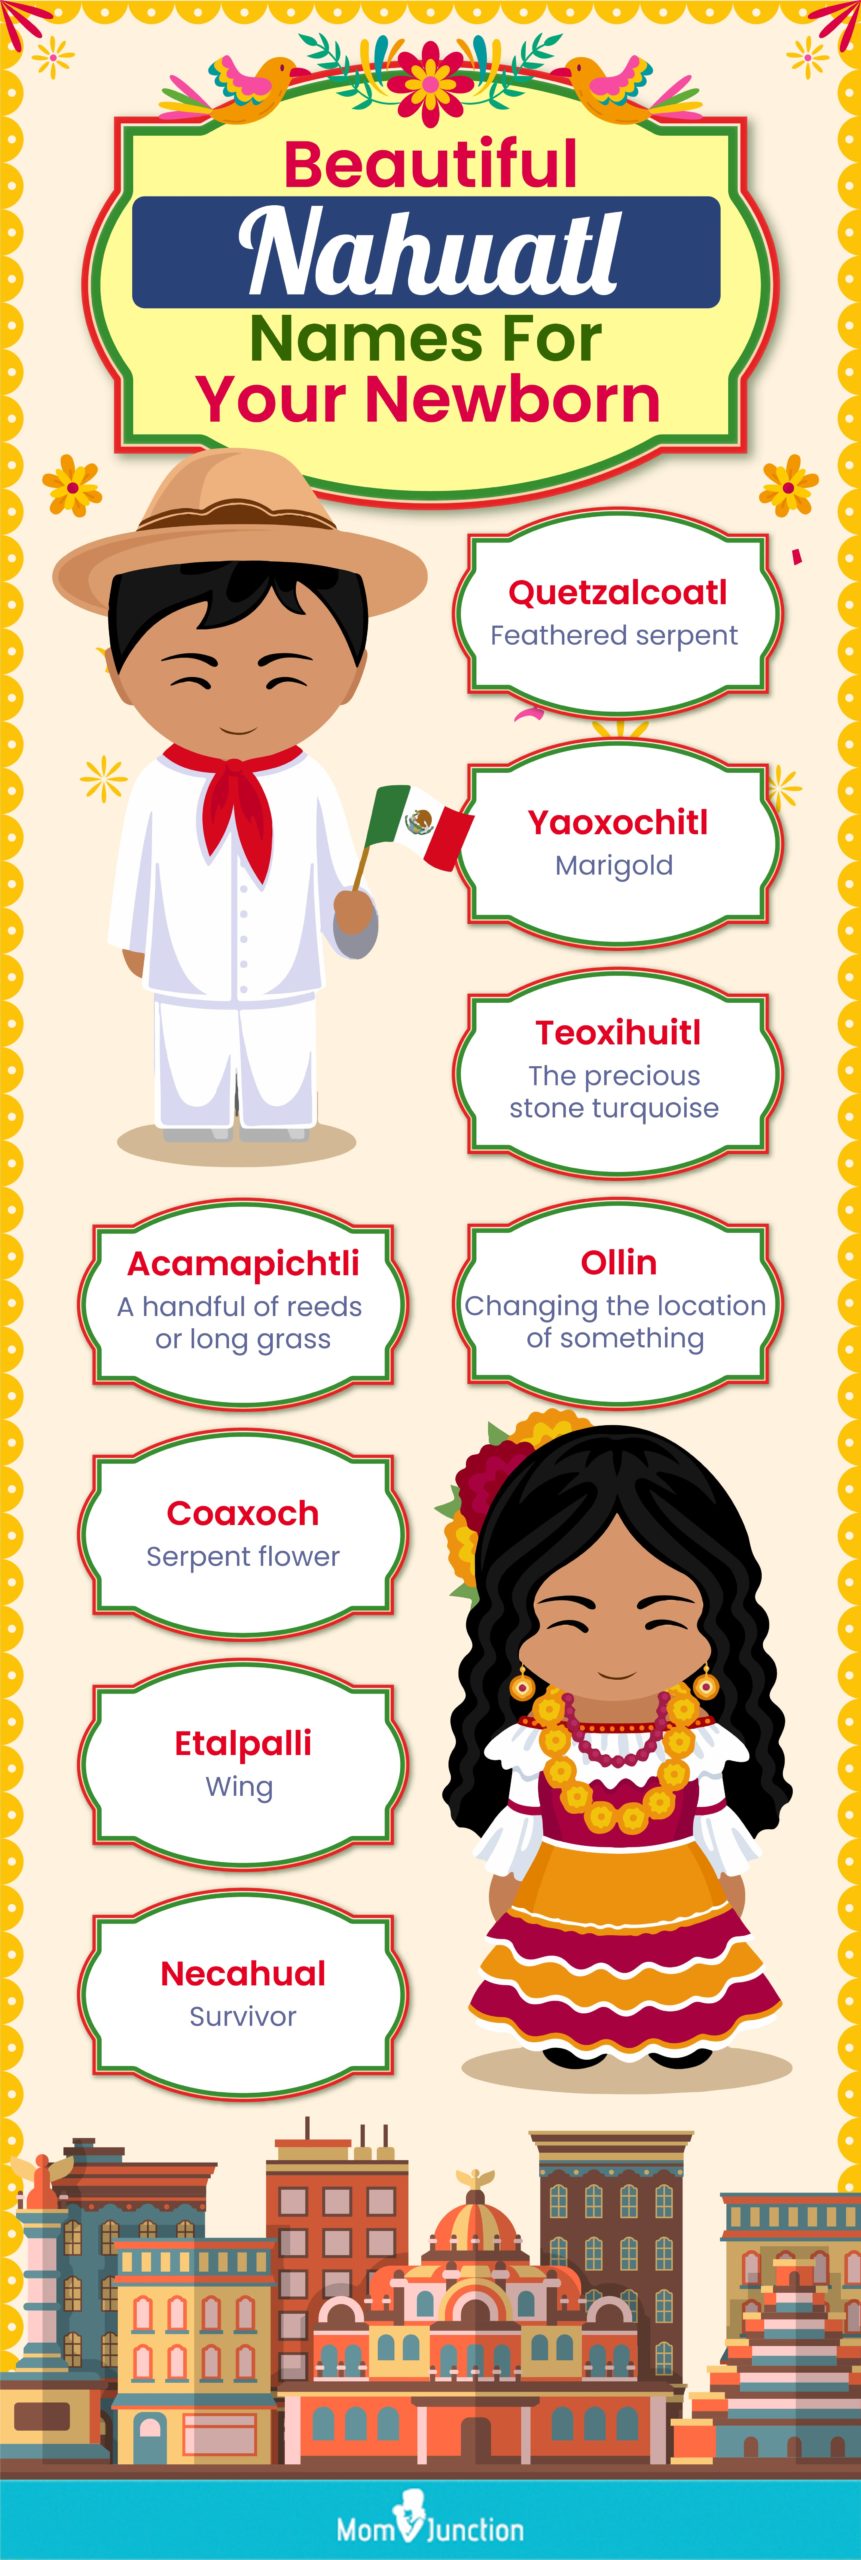 beautiful nahuatl names for your newborn (infographic)